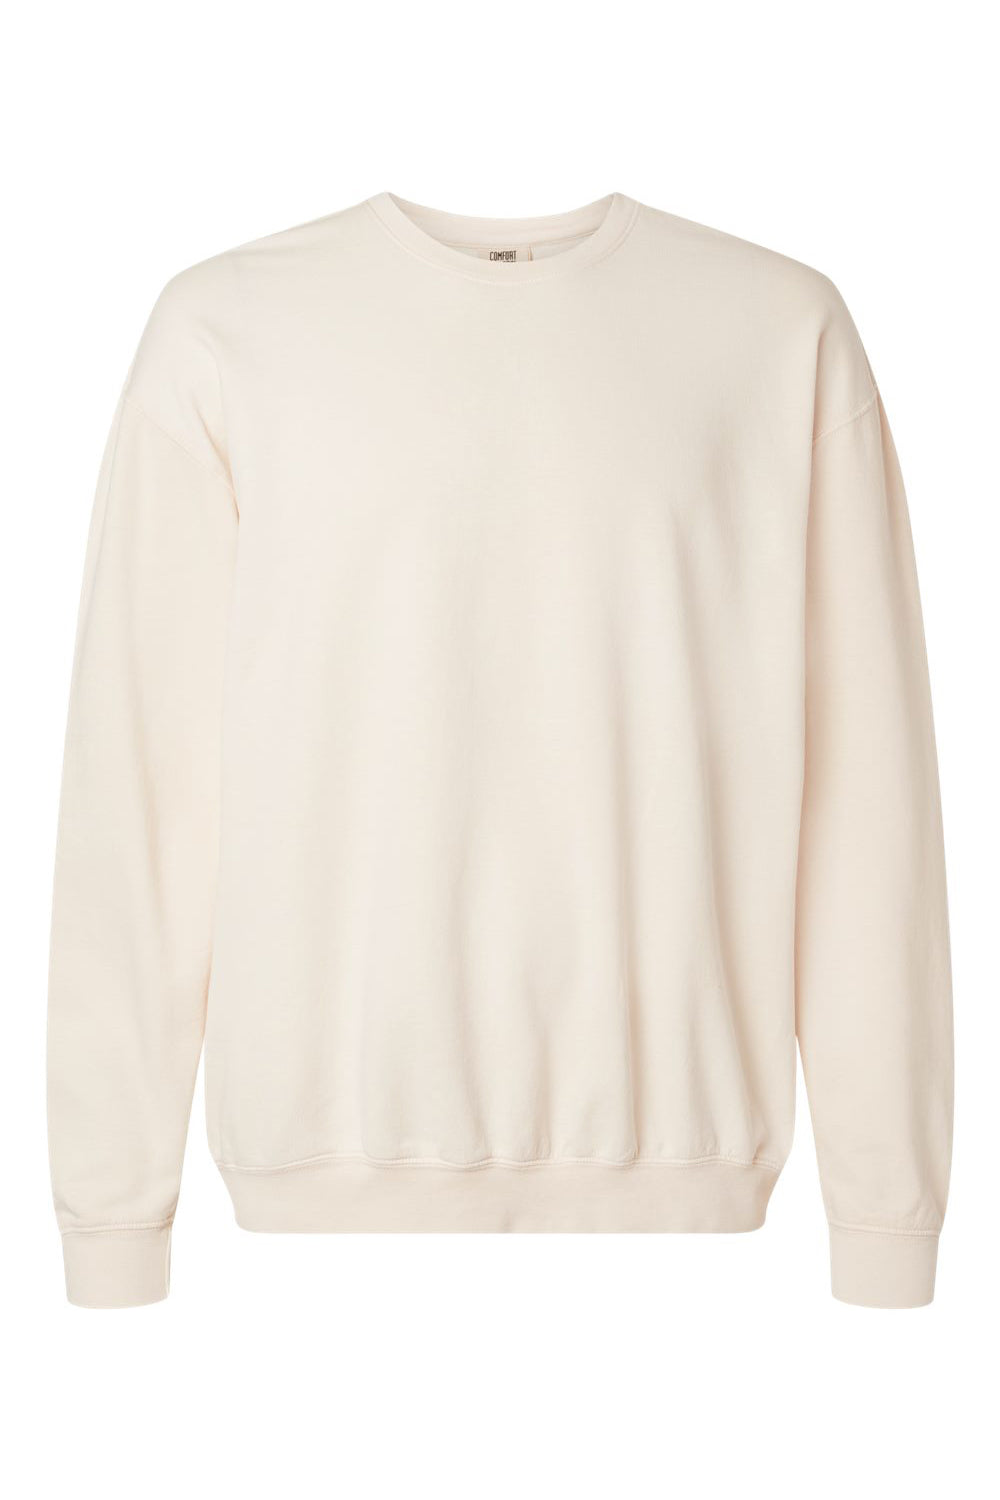 Comfort Colors 1466 Mens Garment Dyed Fleece Crewneck Sweatshirt Ivory Flat Front